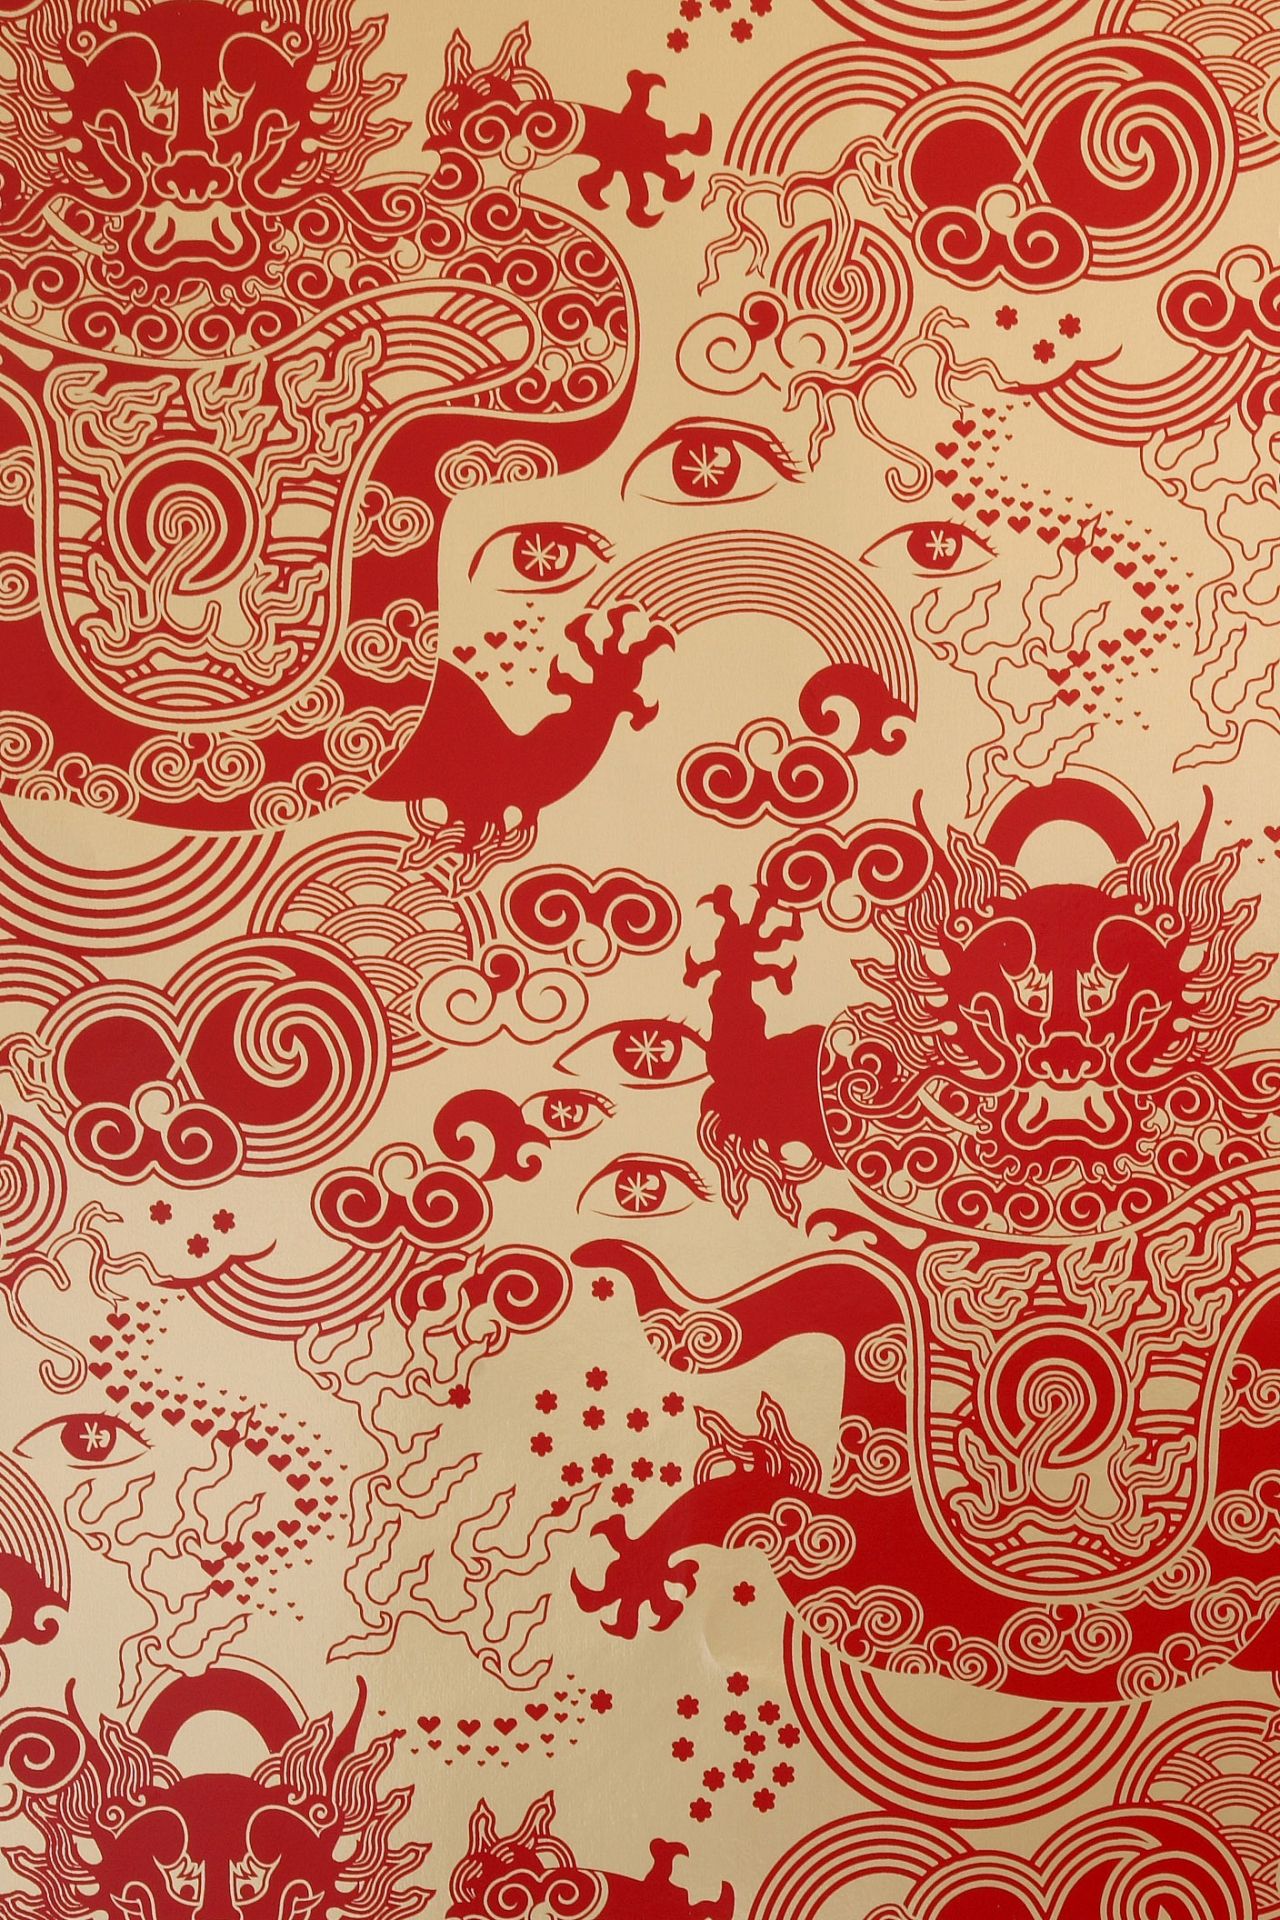 Celestial Dragon Art Wallpapers